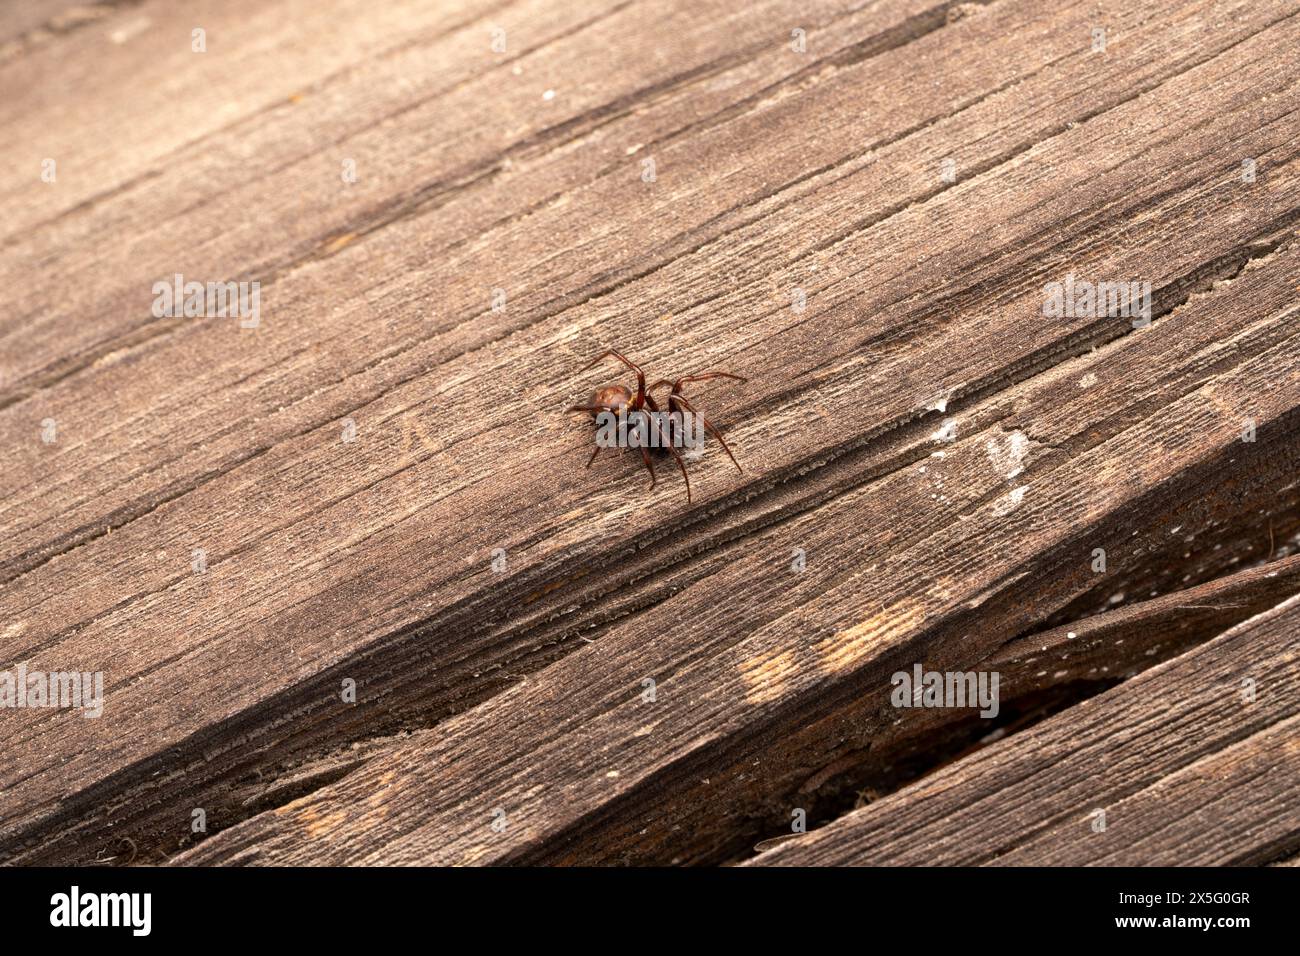 Steatoda bipunctata Familie Theridiidae Gattung Steatoda Cob-Web Spinne wilde Natur Insektenfotografie, Bild, Tapete Stockfoto